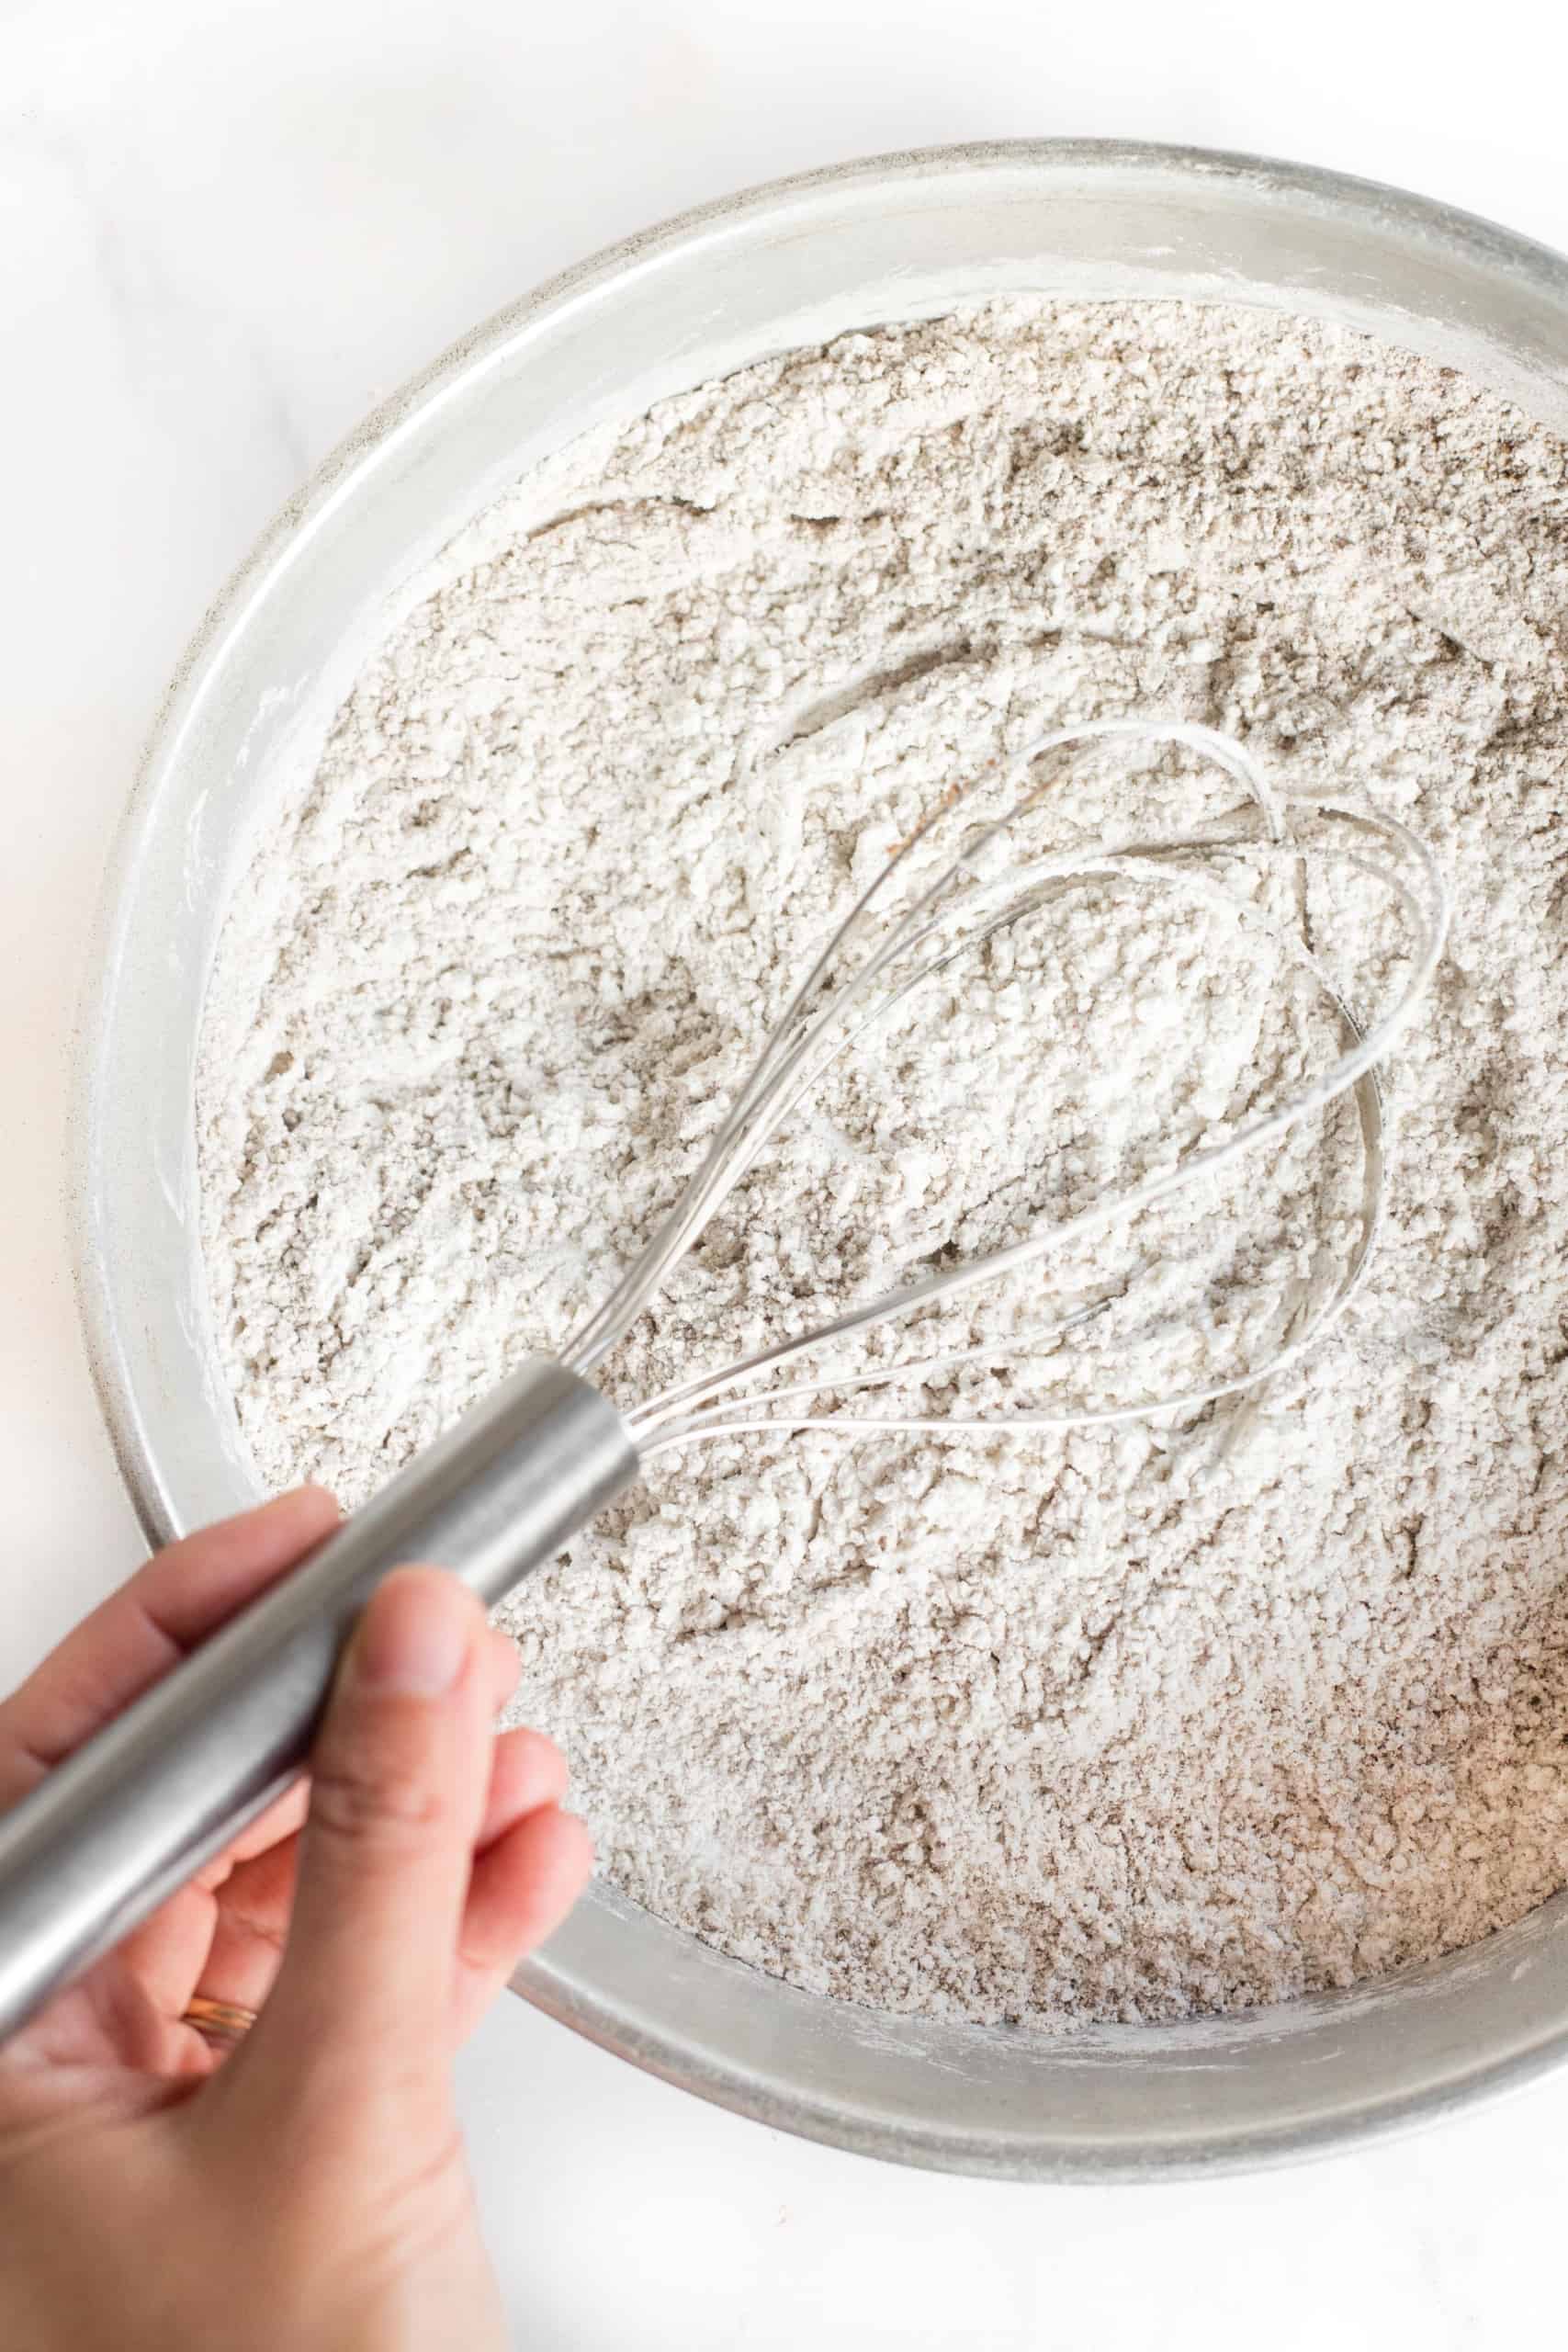 Whisking flour mixture in a metal bowl.